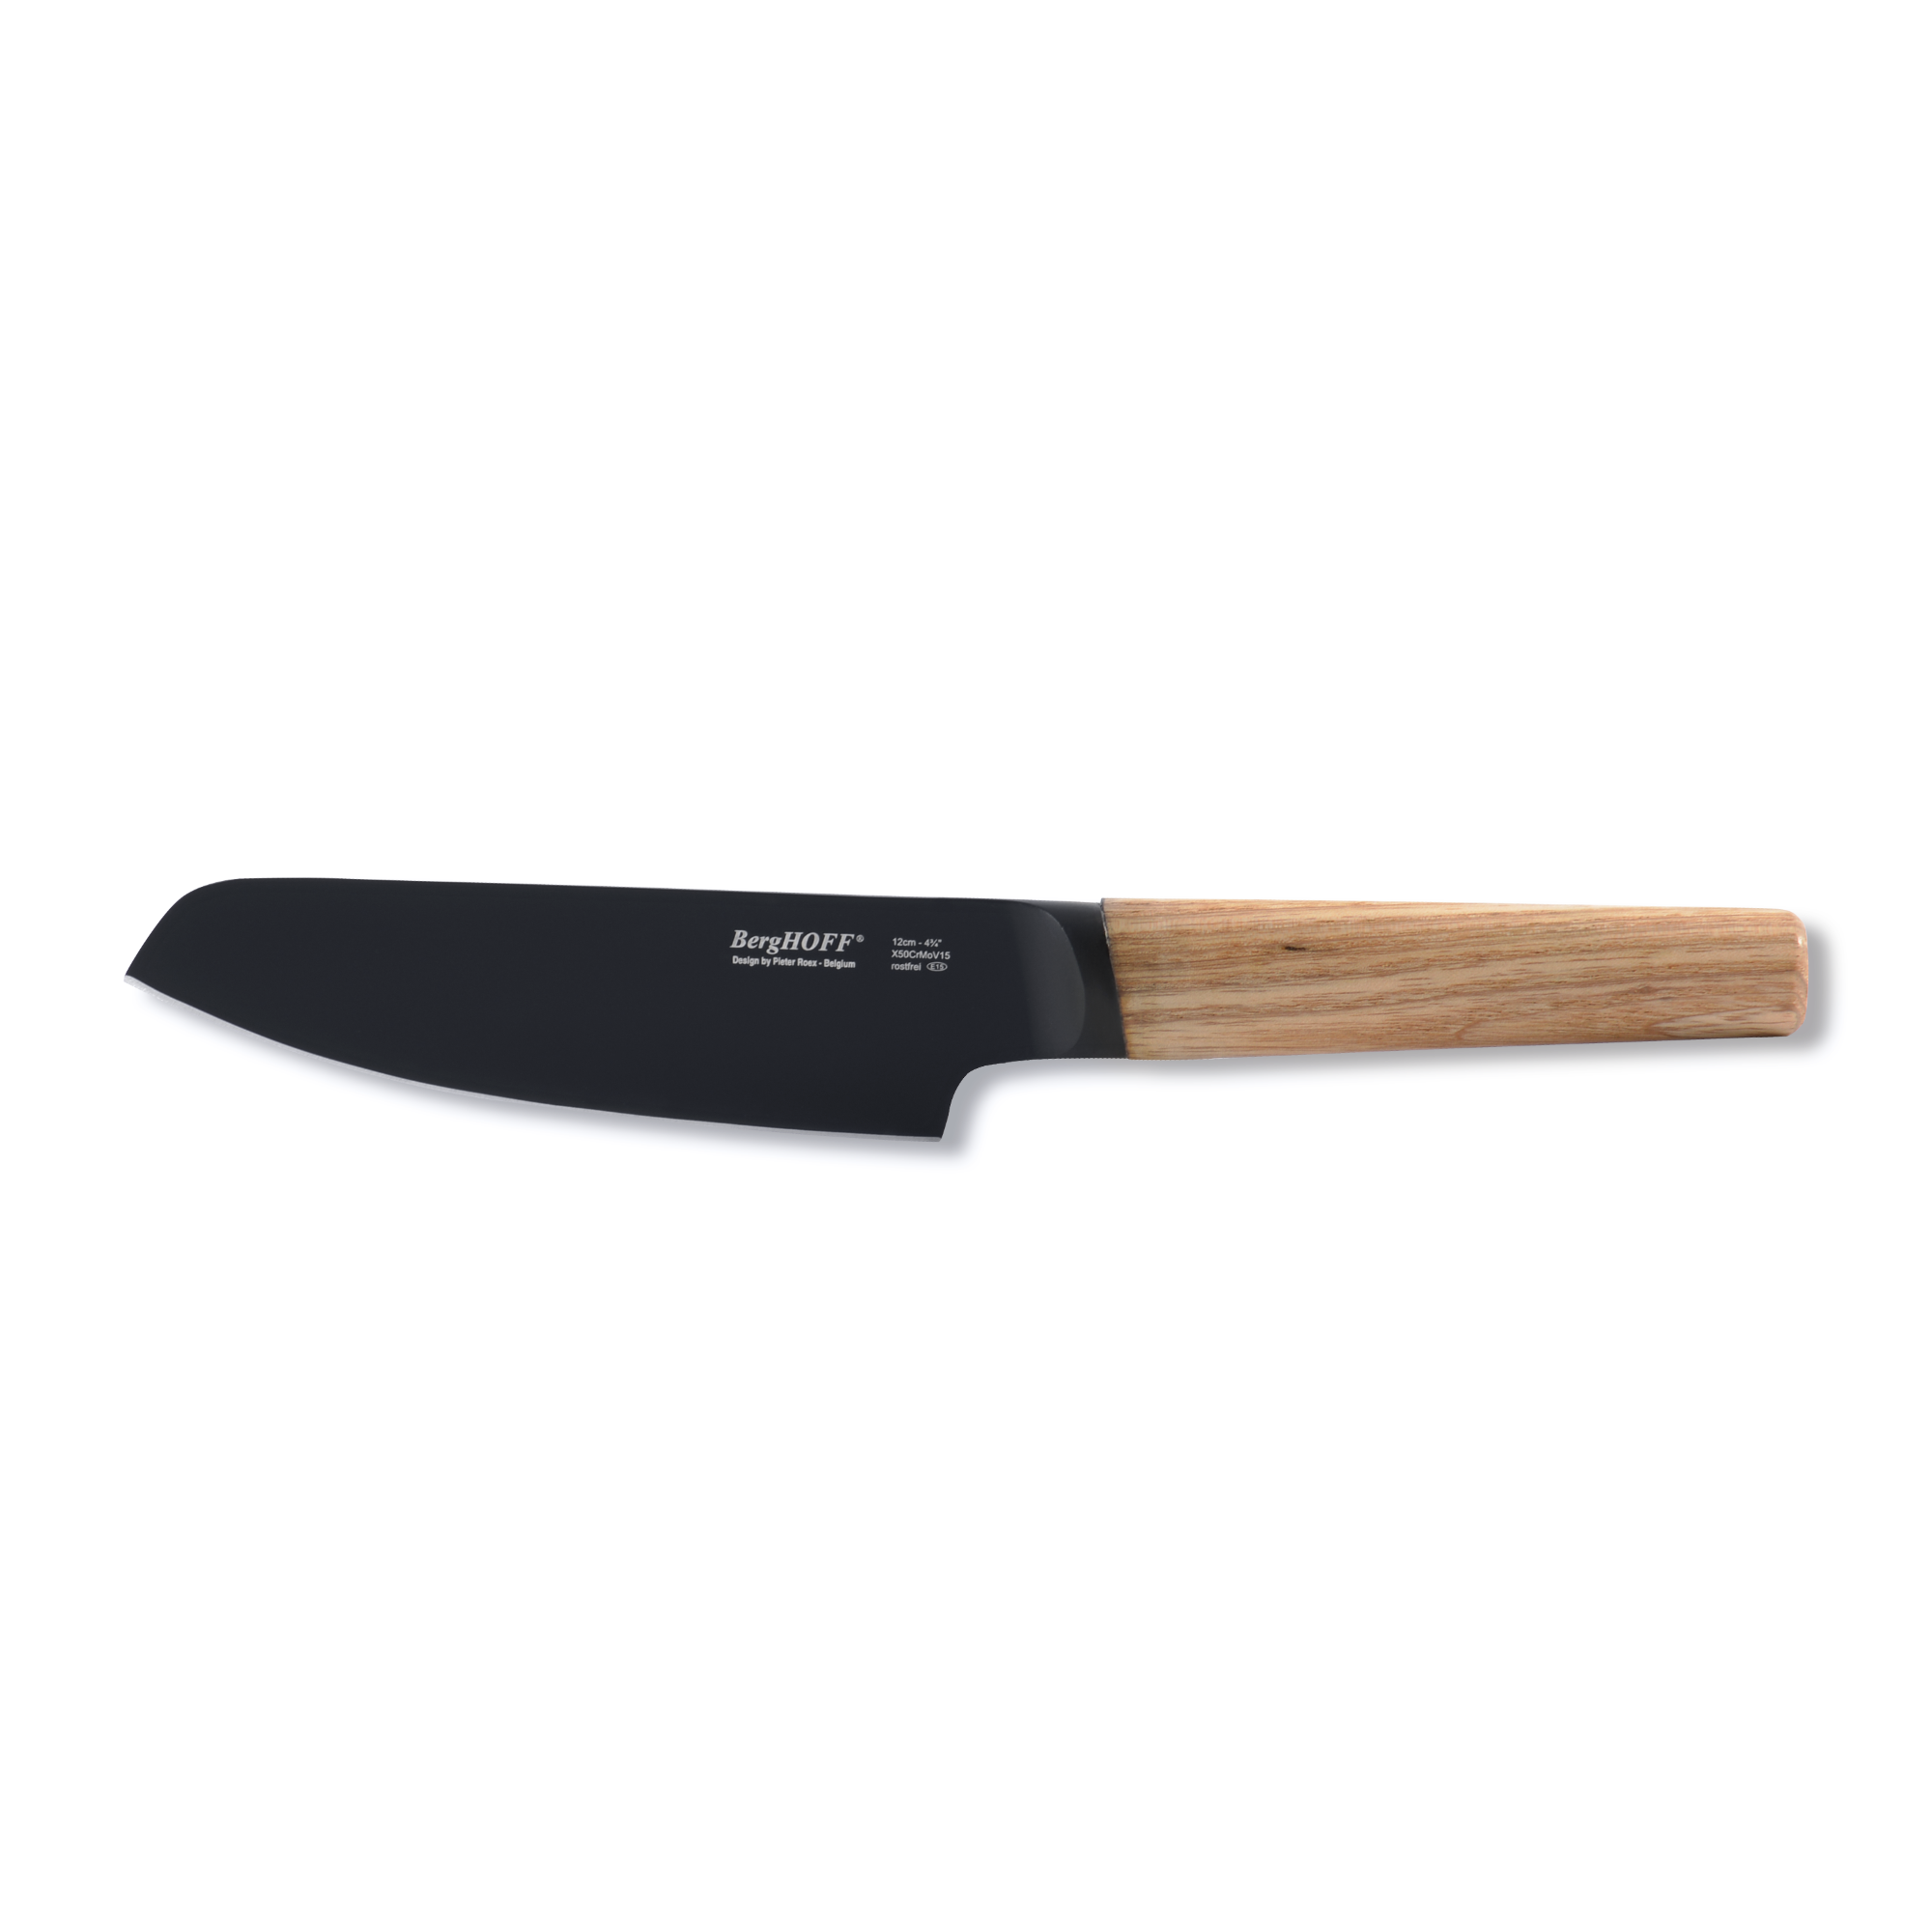 Vegetable knife wooden handle 12 cm - Ron | Official BergHOFF website